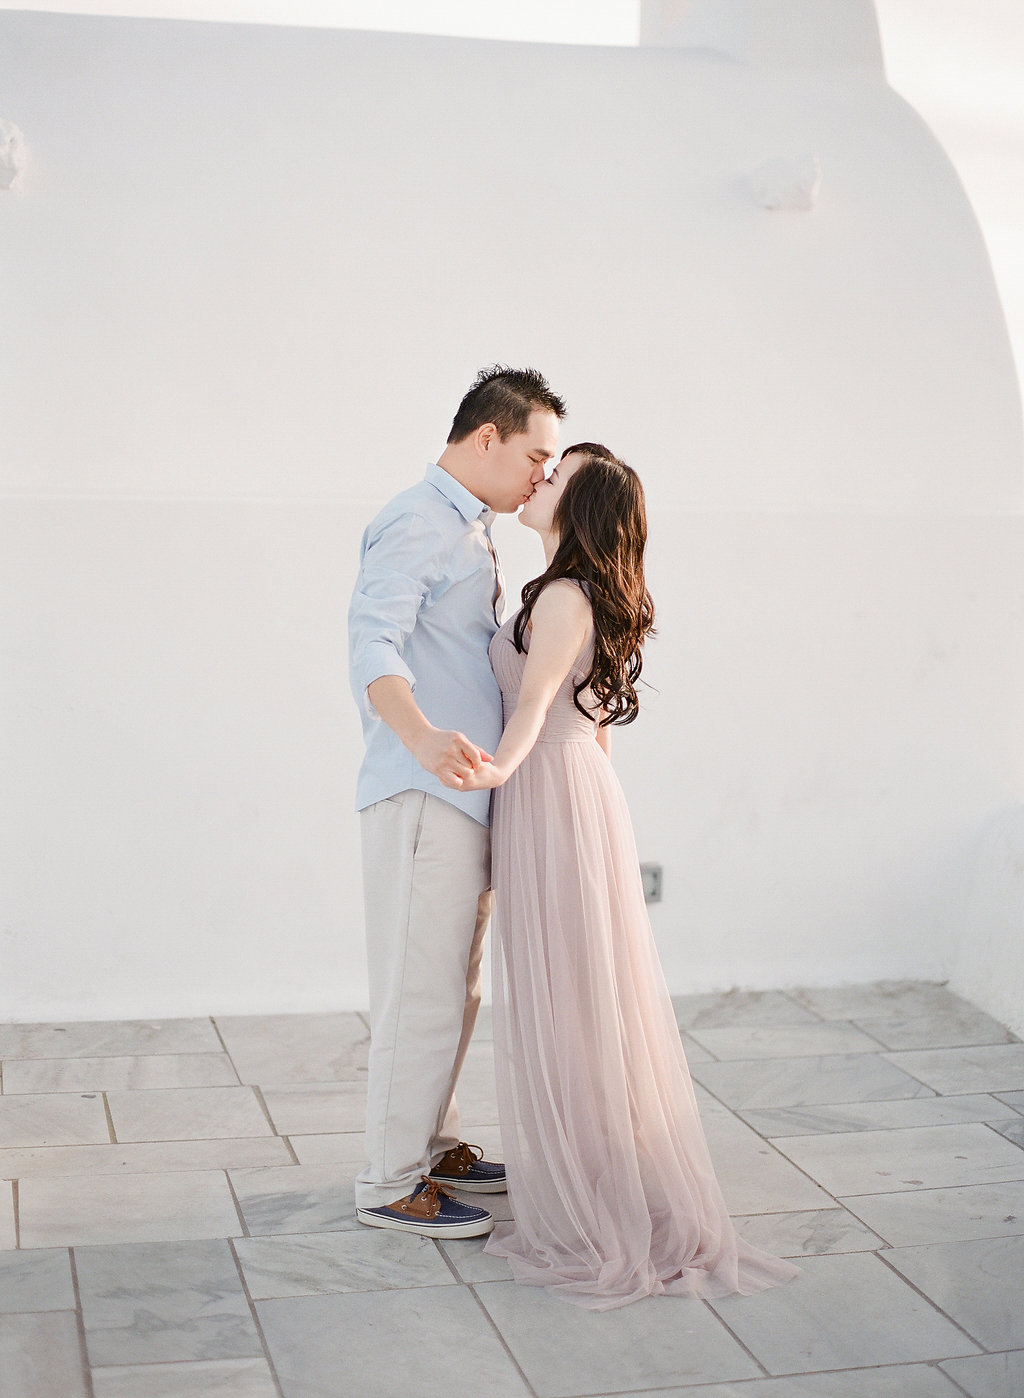 Santorini Honeymoon Session with Organic Effortless Style | Les Anagnou fine art film wedding photographers in Greece 21